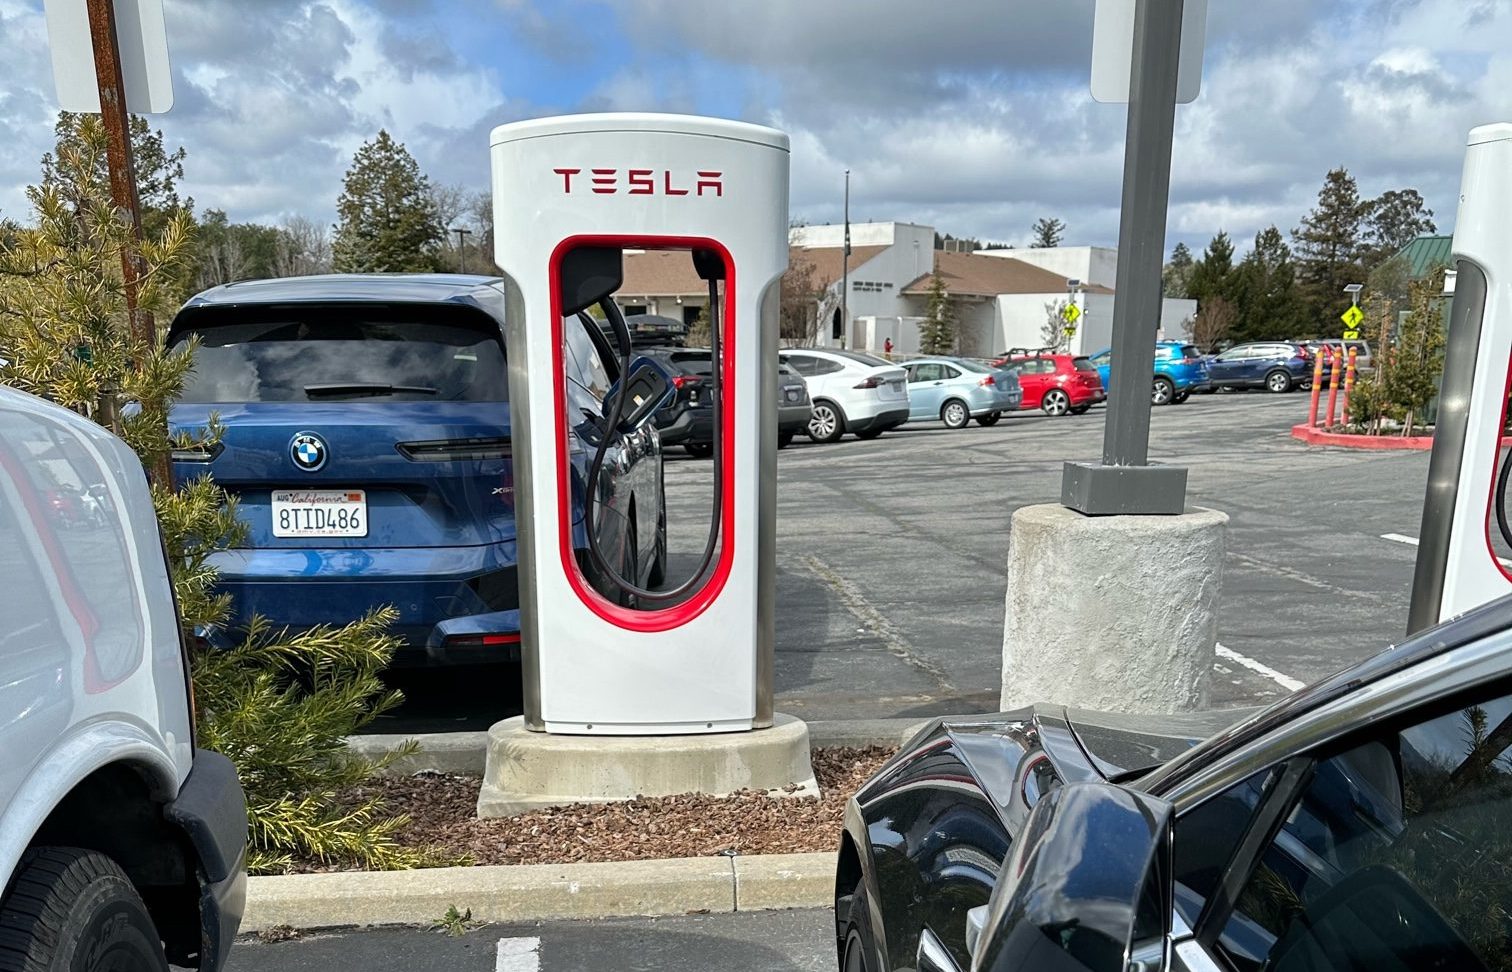 Tesla installs more Magic Docks, this time in California - Drive Tesla